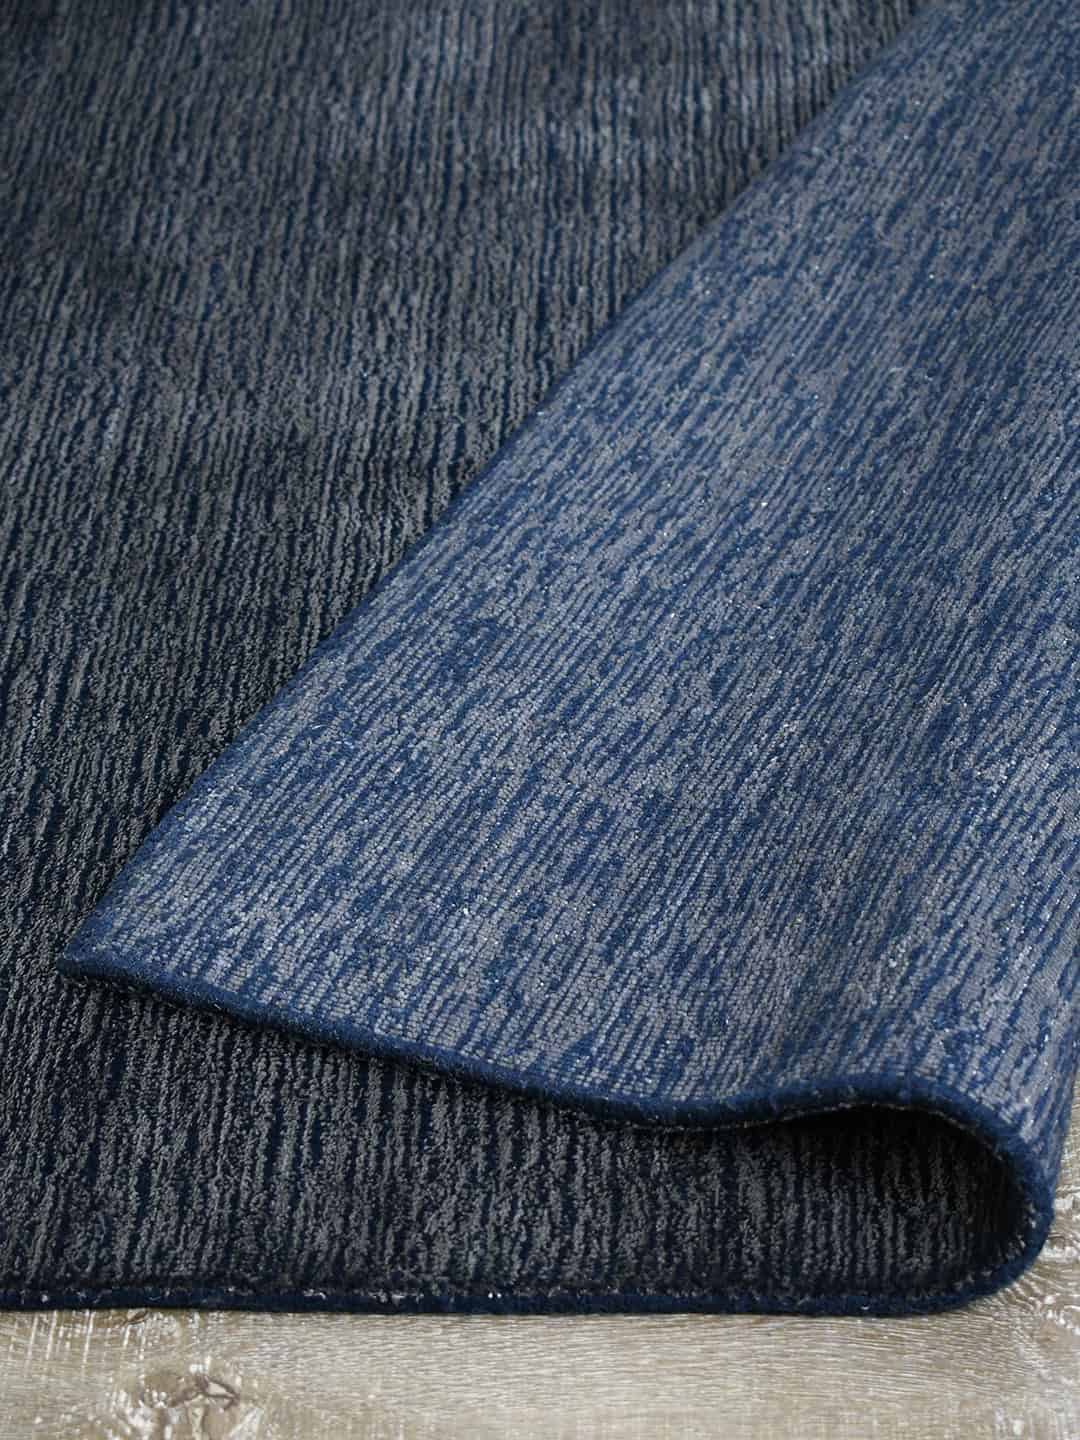 shimmer-oceanic-wool-artsilk-blue-stans-rugs-perth